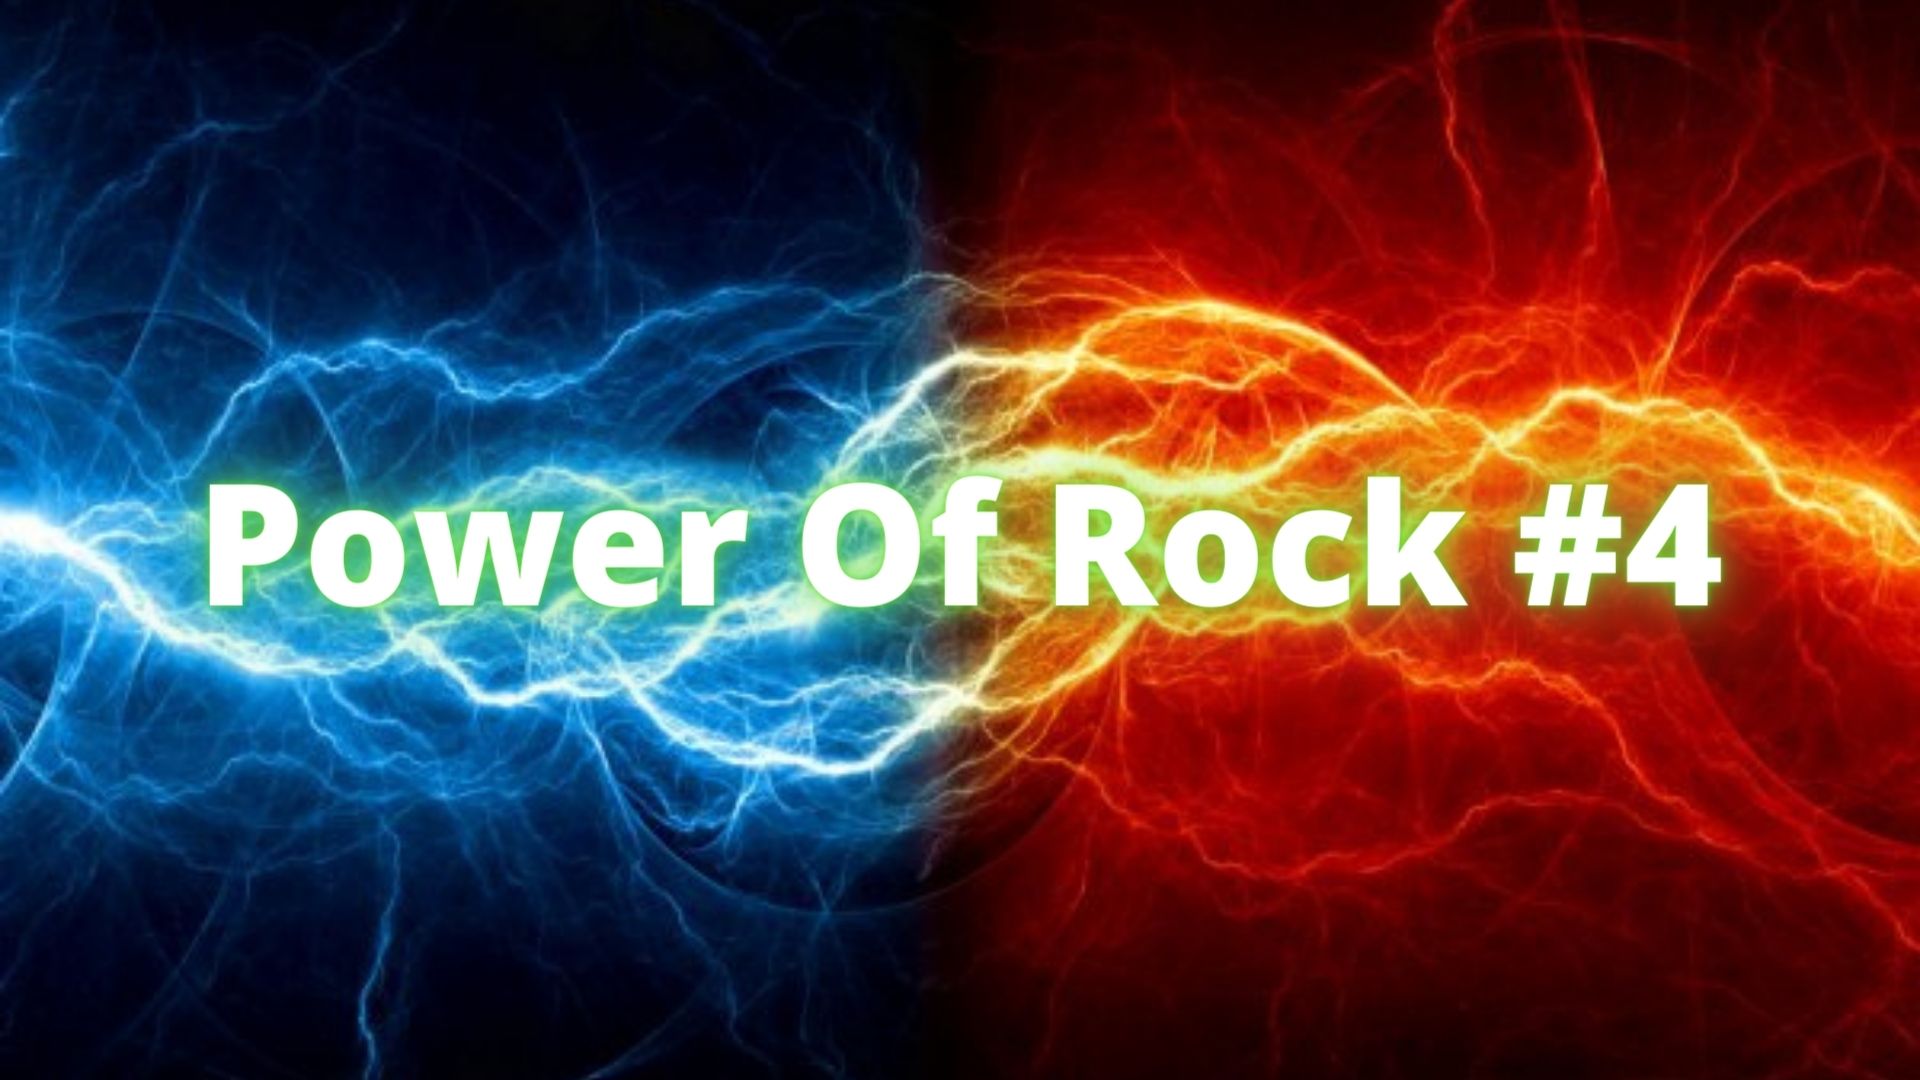 Power Of Rock #4